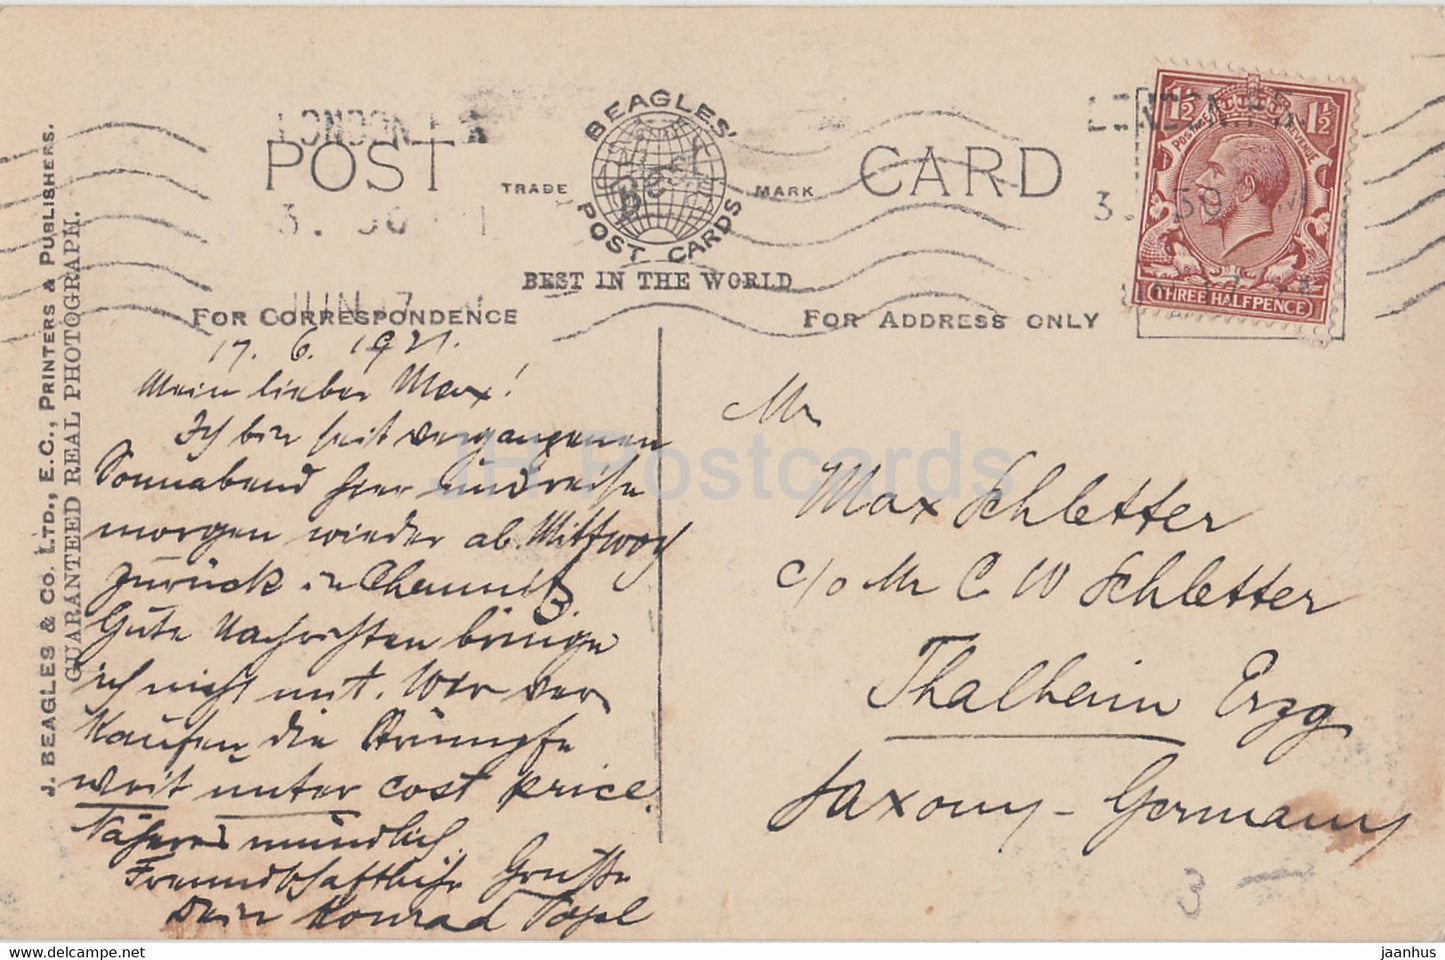 London - Trafalgar Square & National Gallery - Beagles - old postcard - England - United Kingdom - used